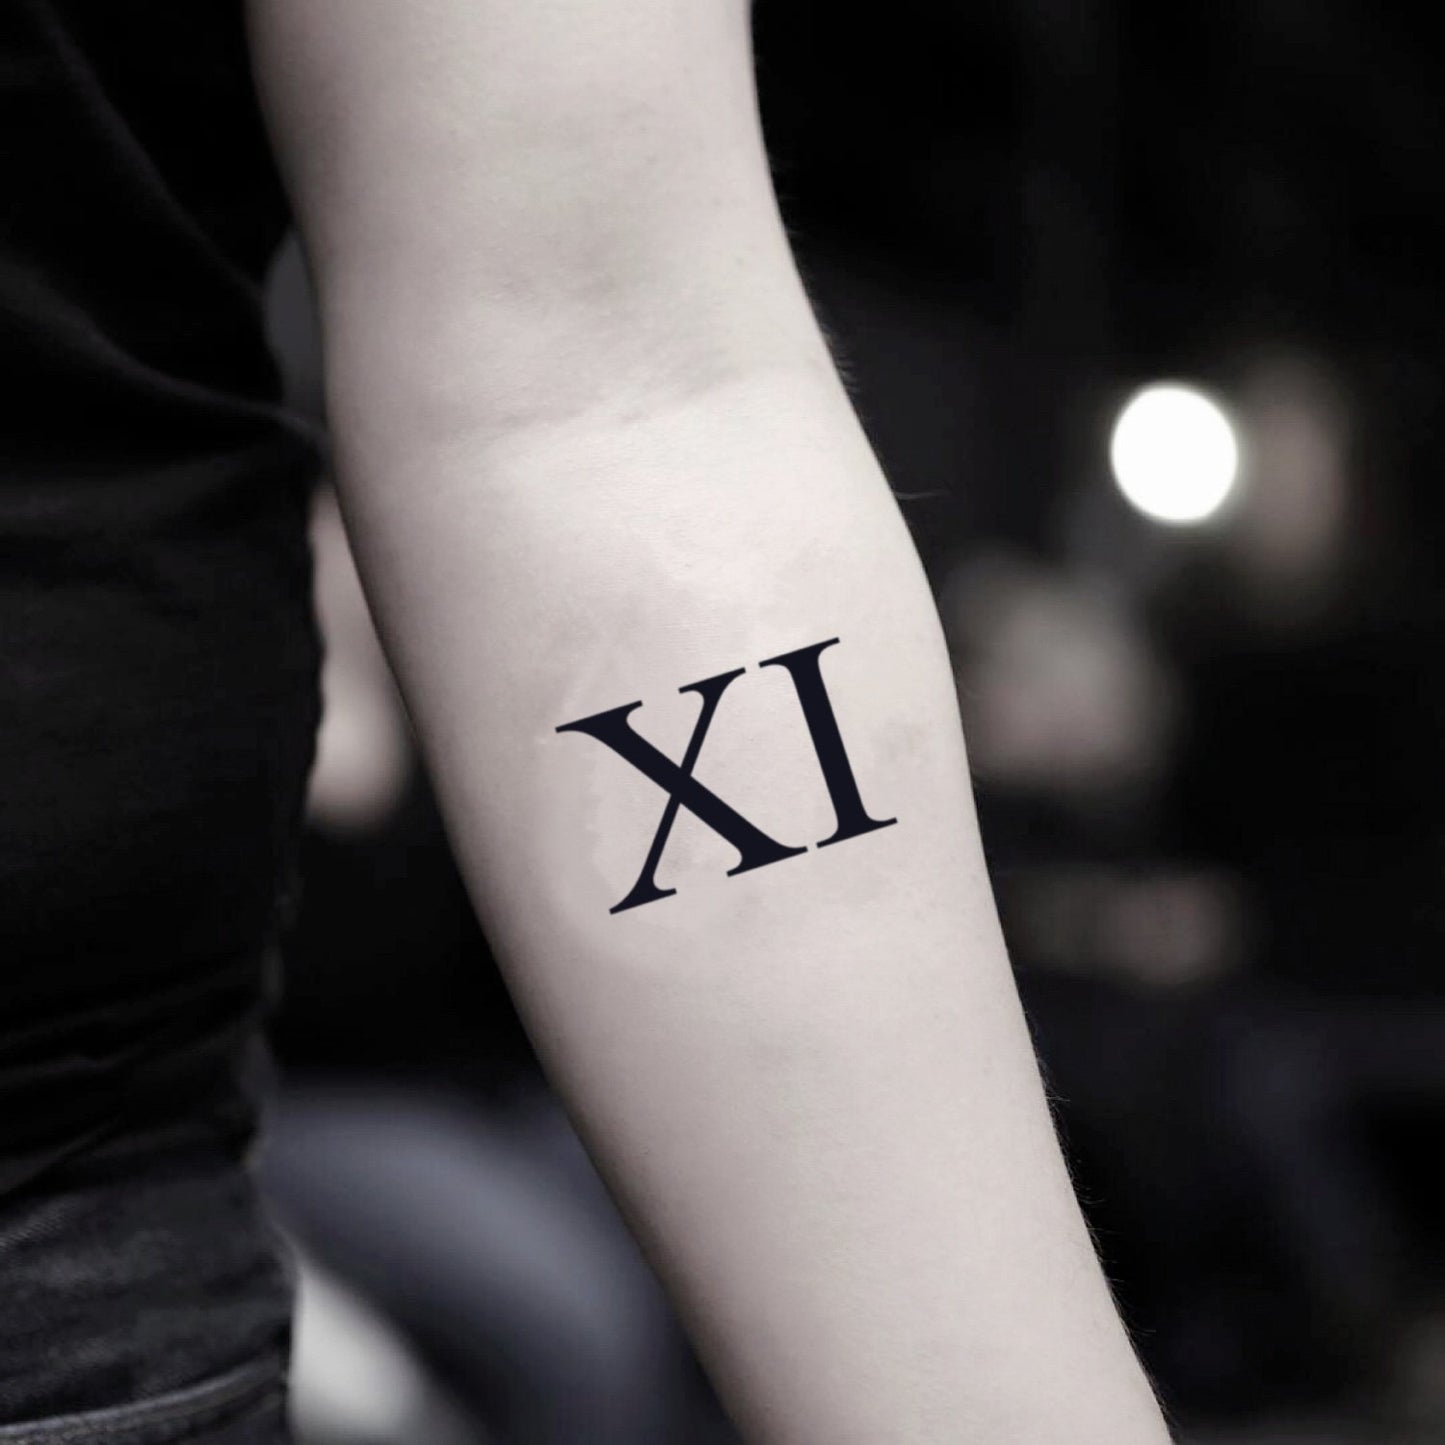 fake small xi roman numeral lettering temporary tattoo sticker design idea on inner arm